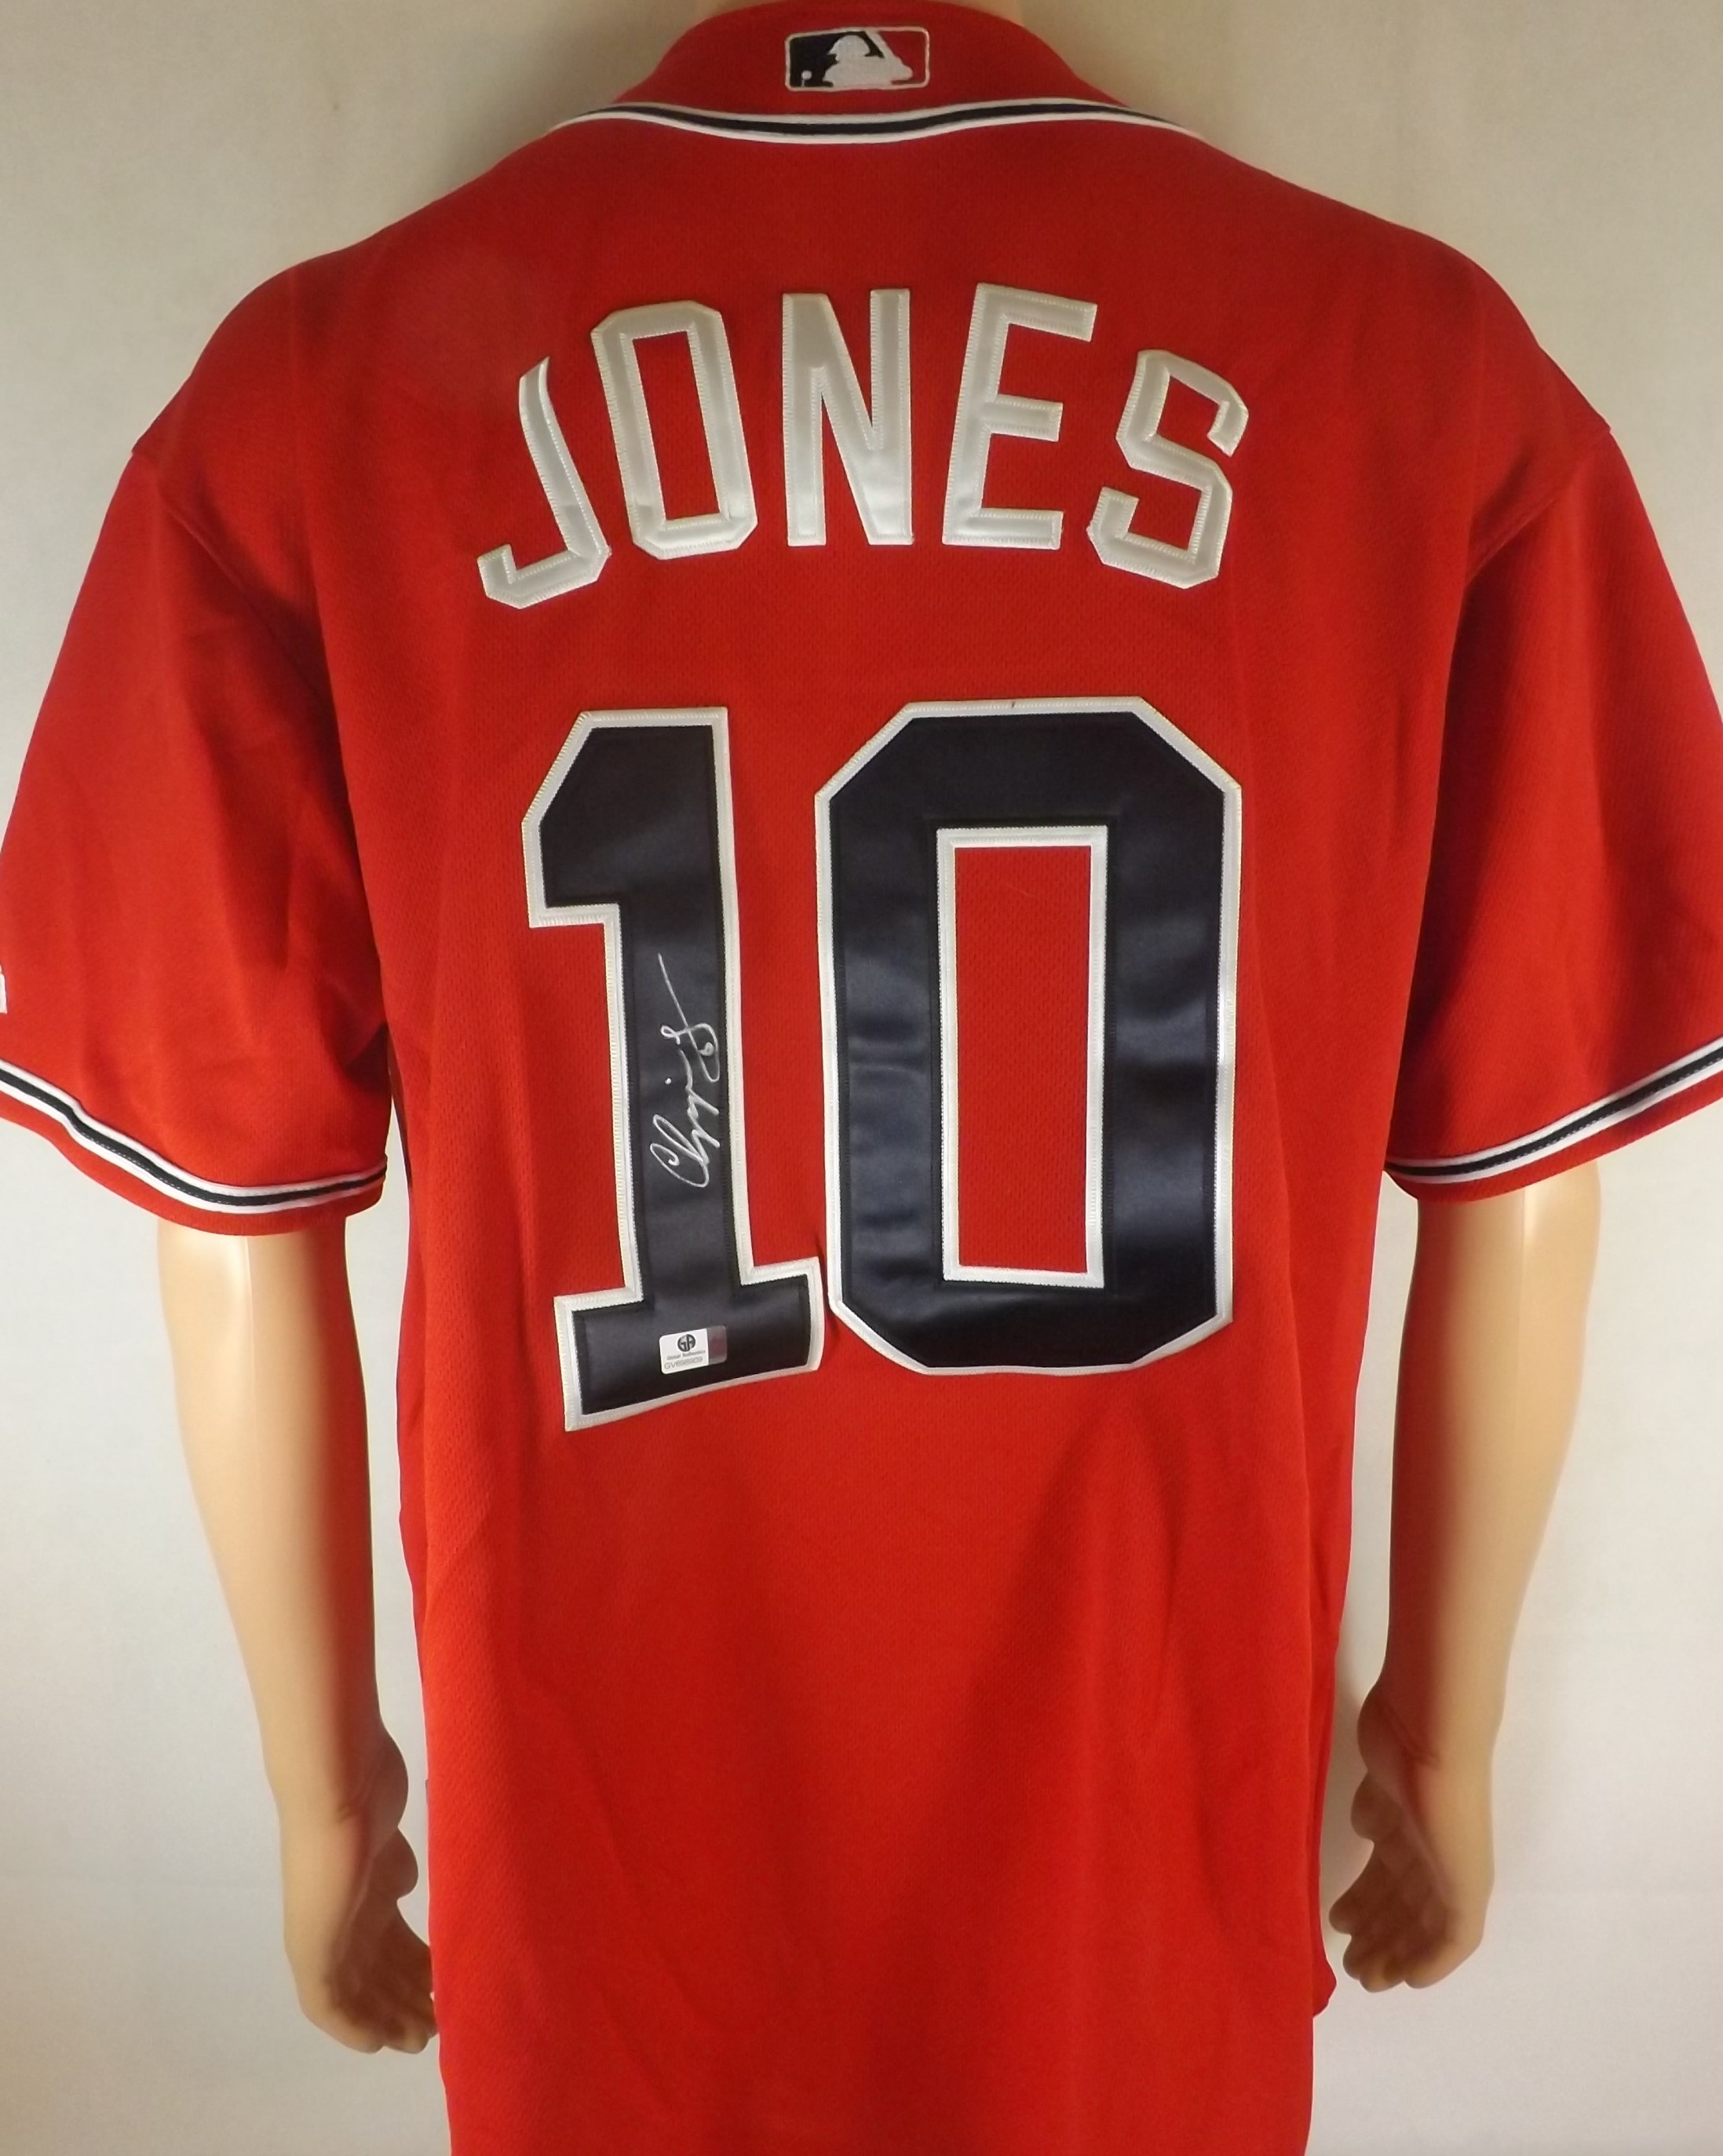 Chipper Jones Size 48 Braves Jersey for Sale in Austin, TX - OfferUp